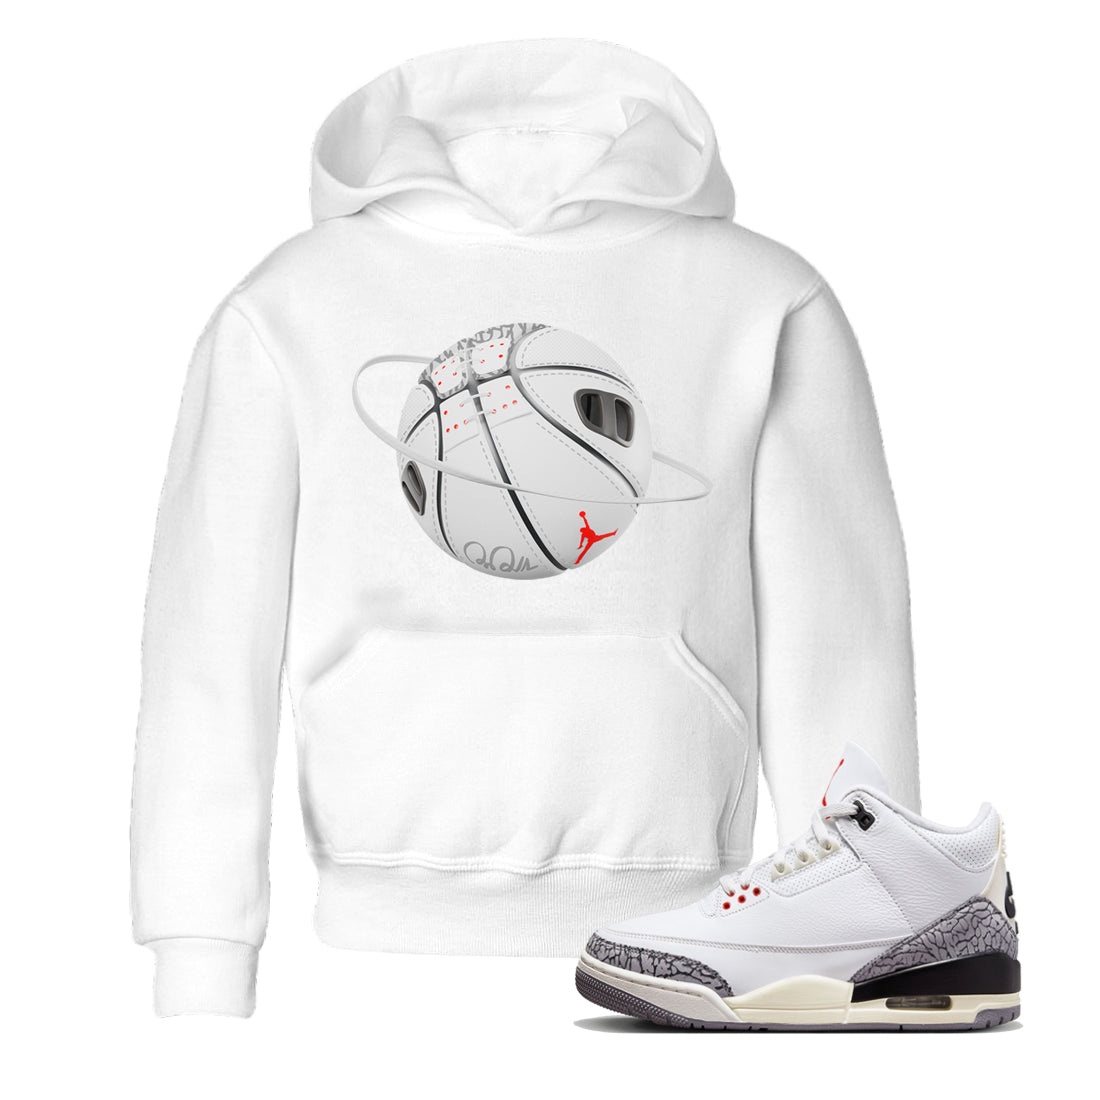 Air Jordan 3 White Cement Shirt To Match Jordans Basketball Planet Sneaker Tees AJ3 White Cement Drip Gear Zone Sneaker Matching Clothing Kids Shirts White 1